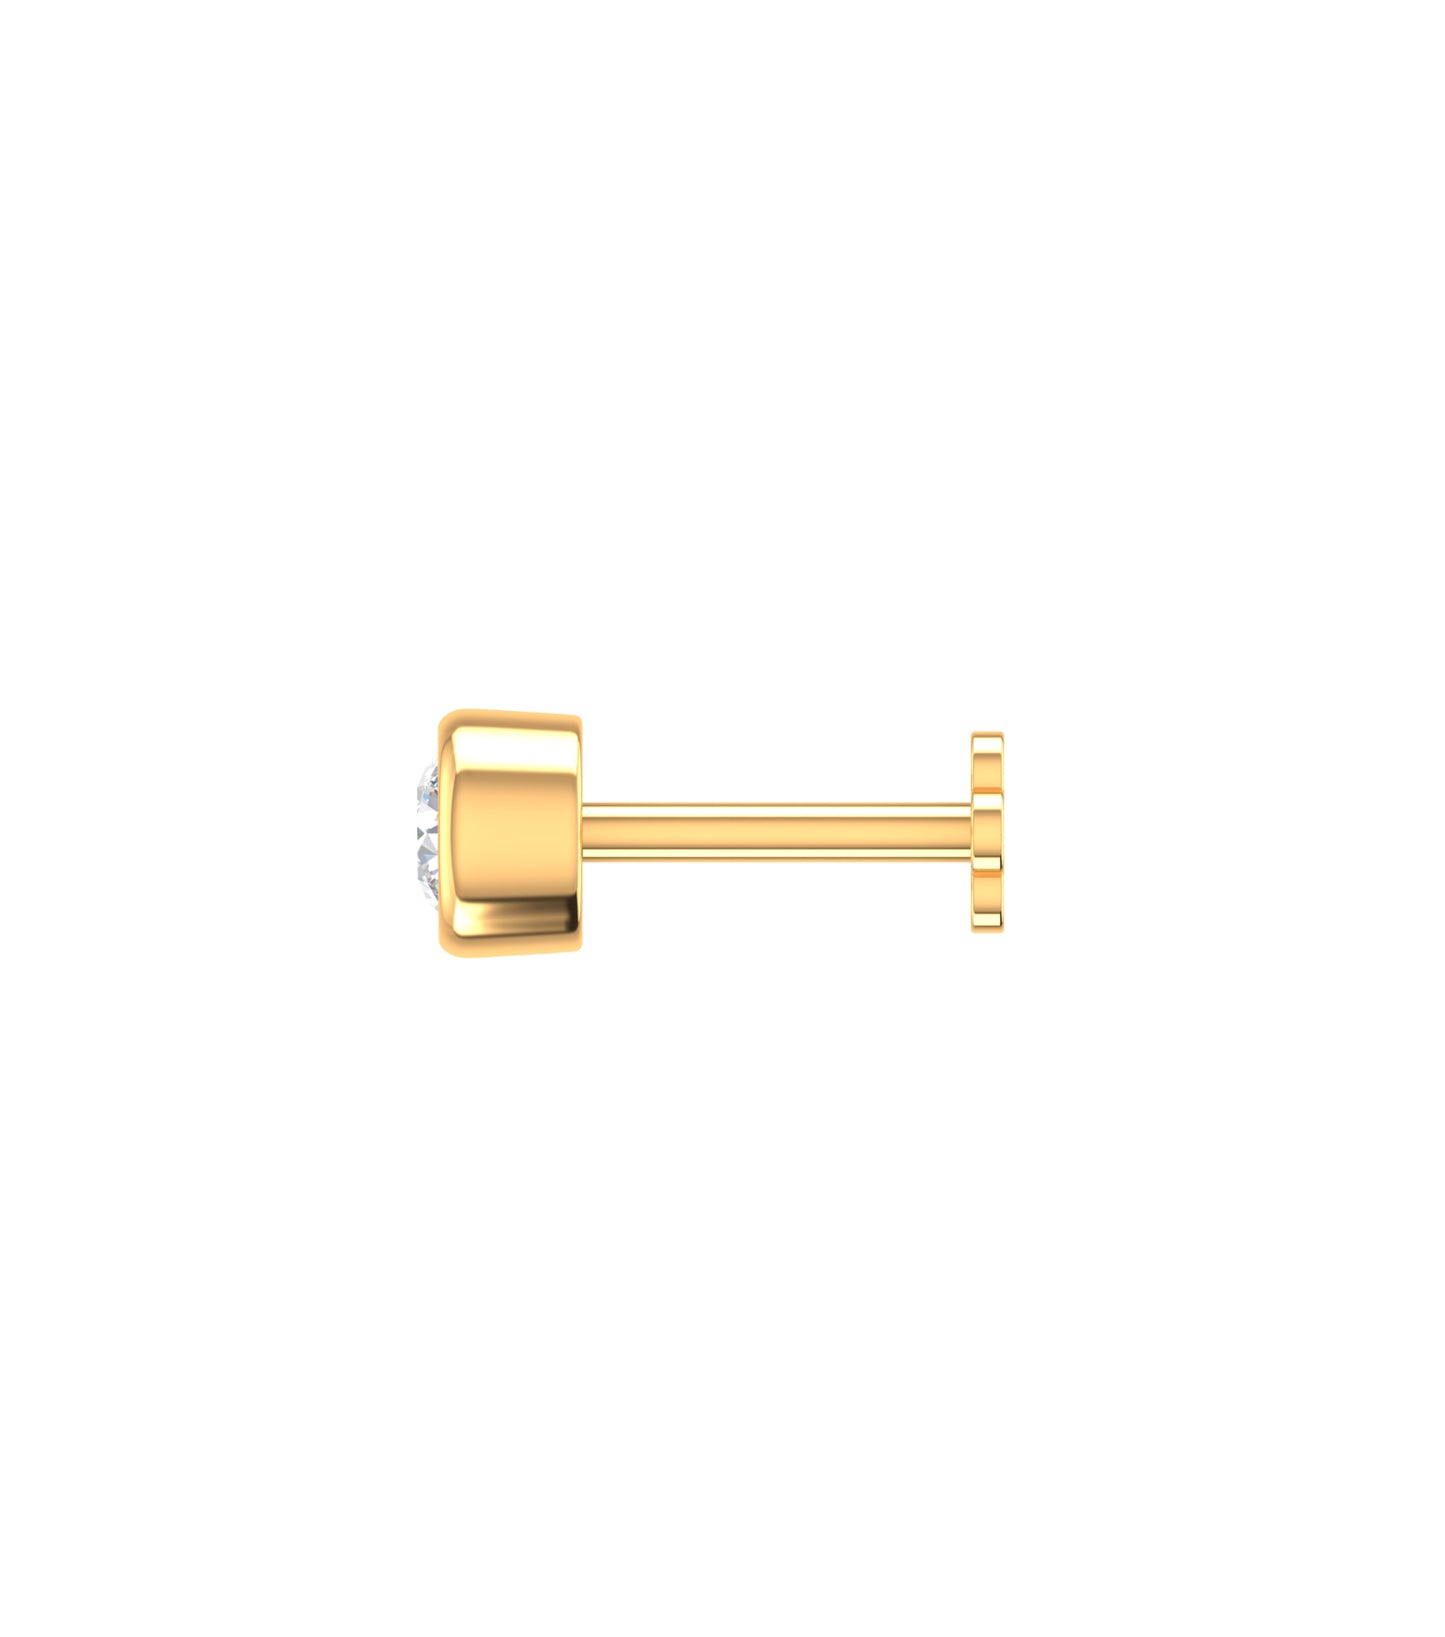 Diamond studded gold nose pin